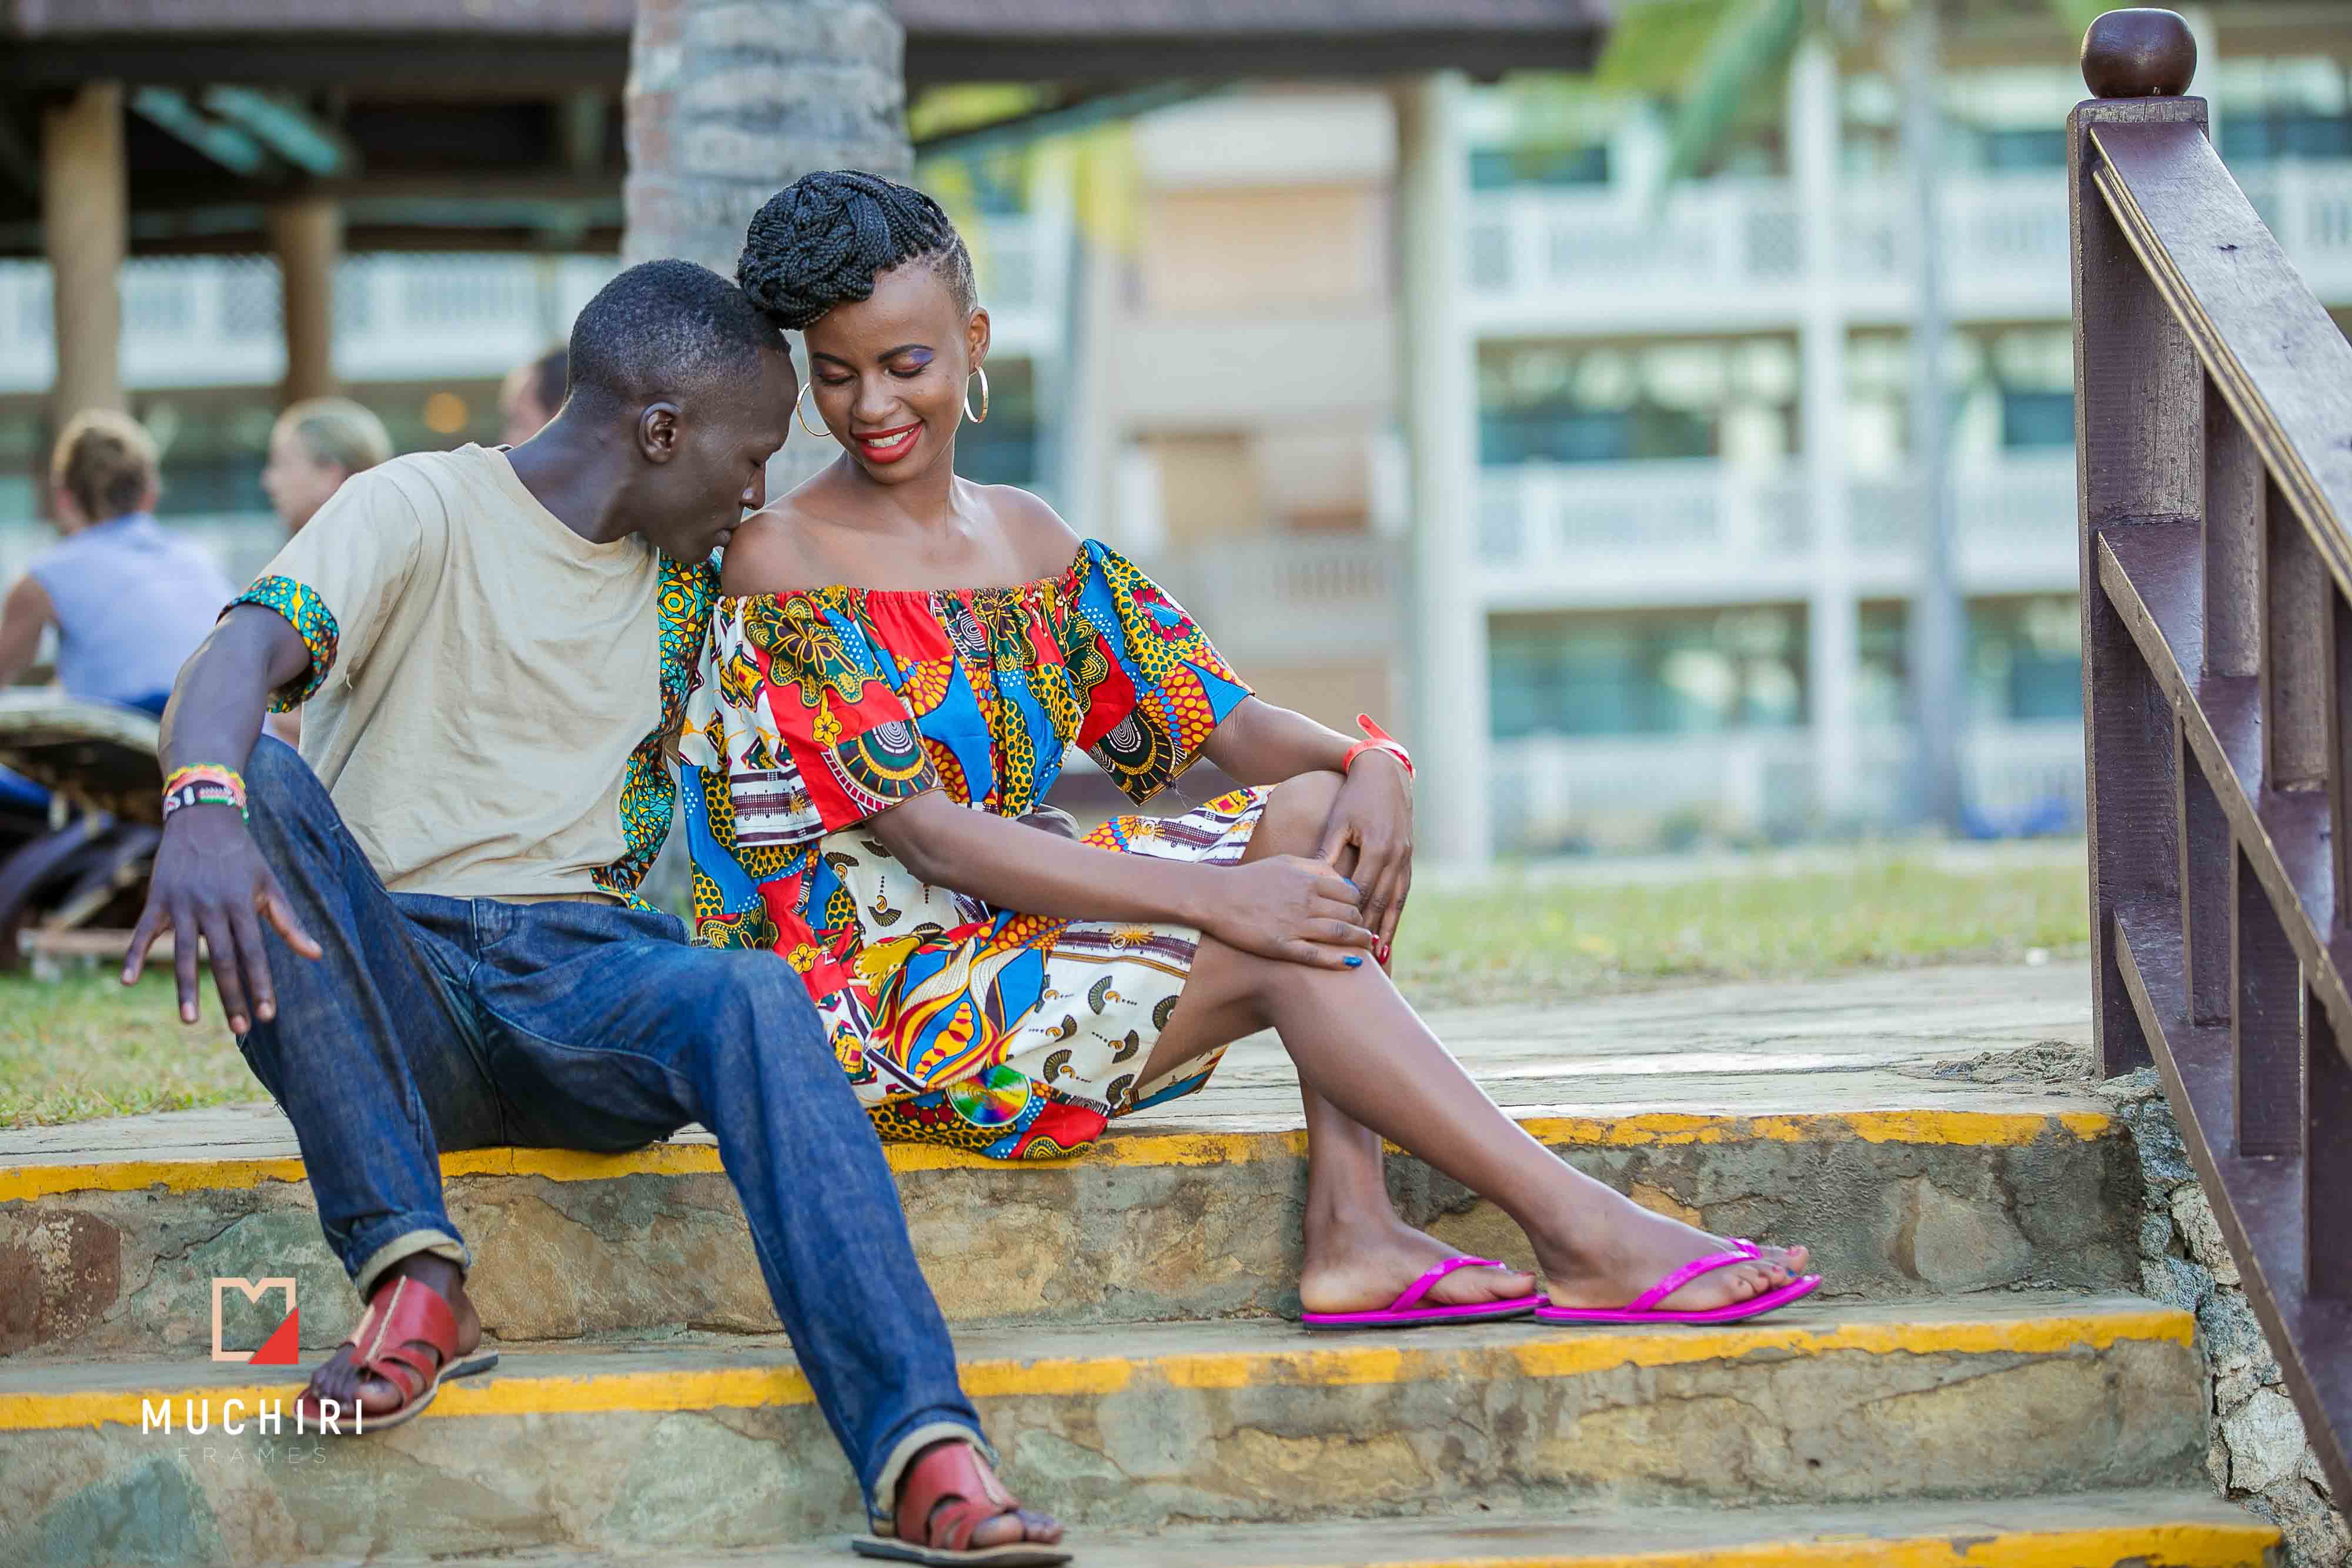 Best wedding photographer in Kenya. The trending street couple